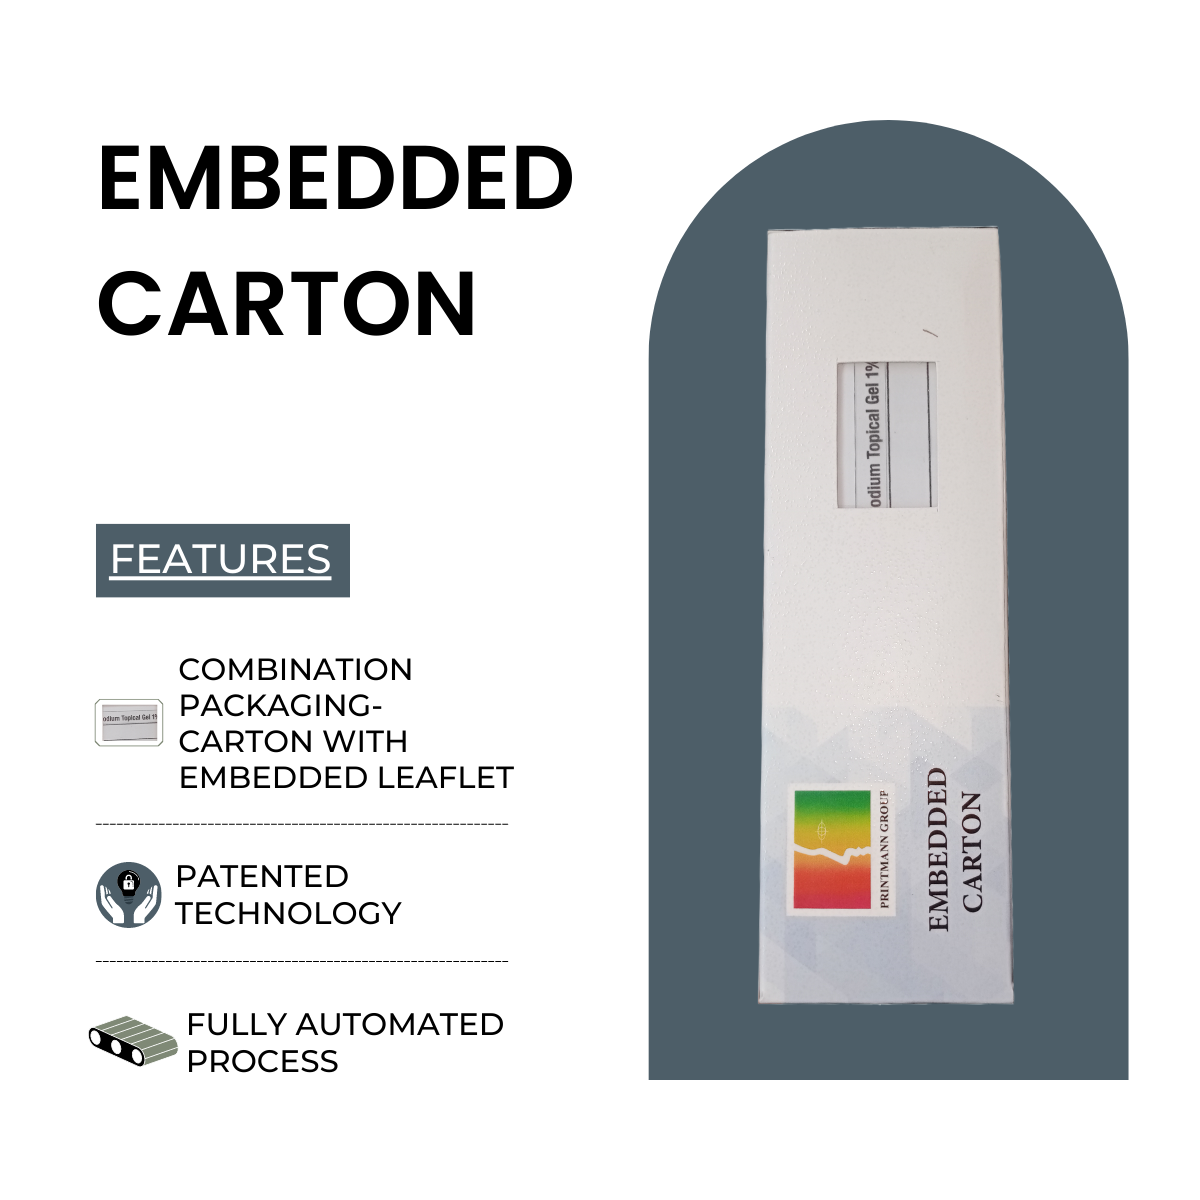 Embedded Carton